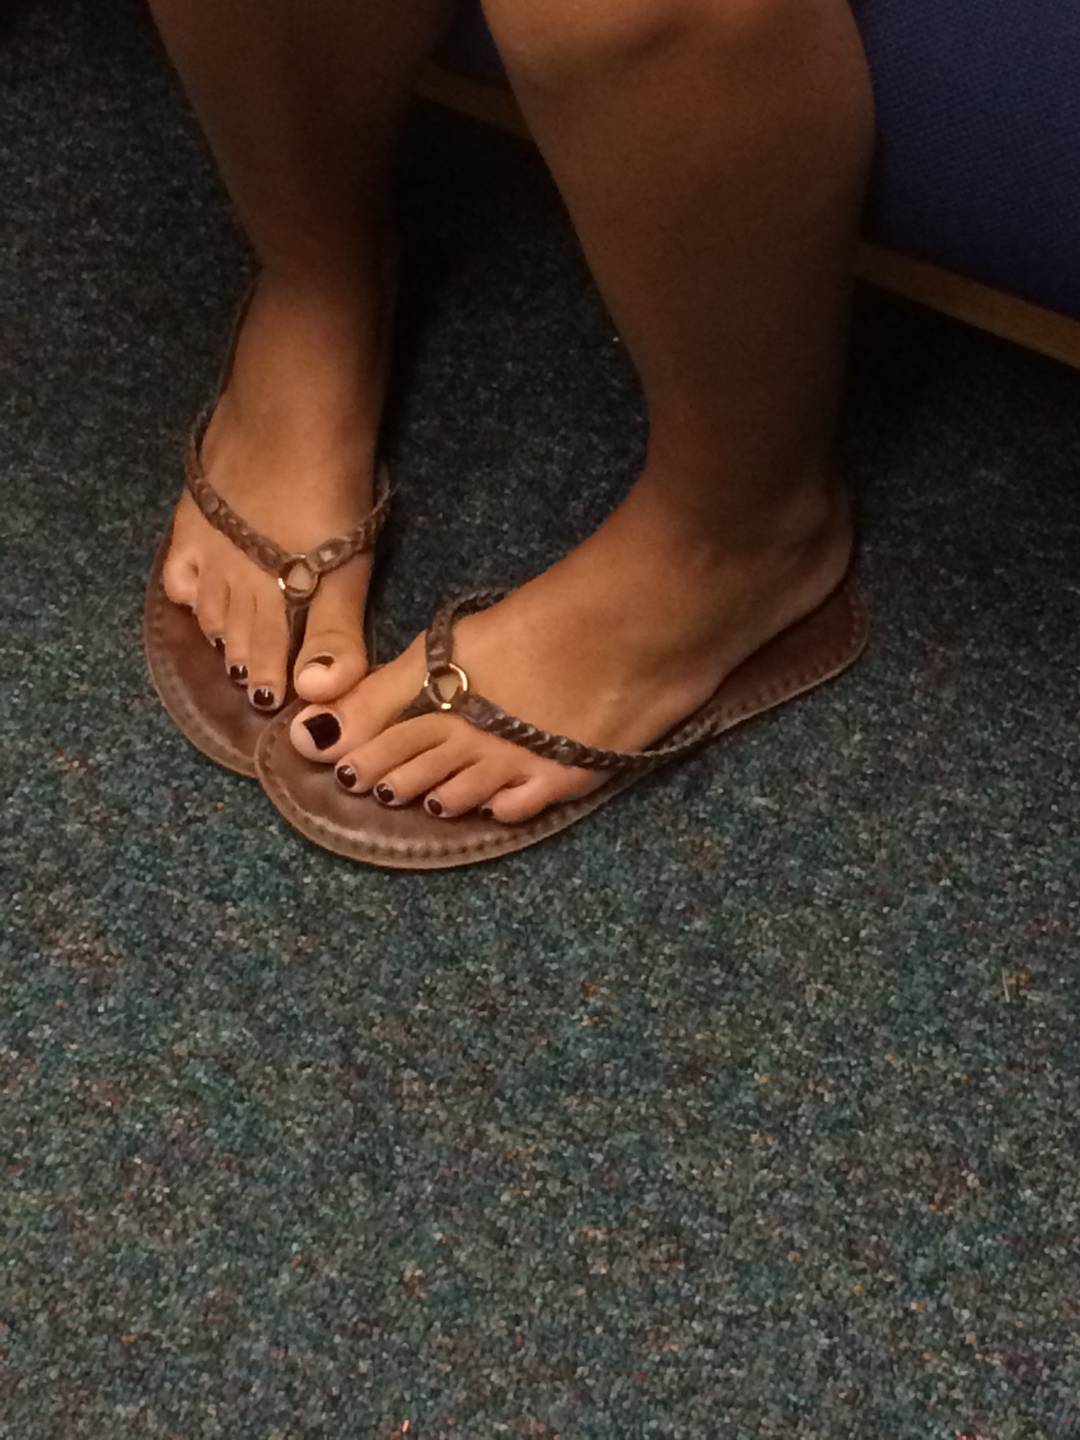 Latinas Feet